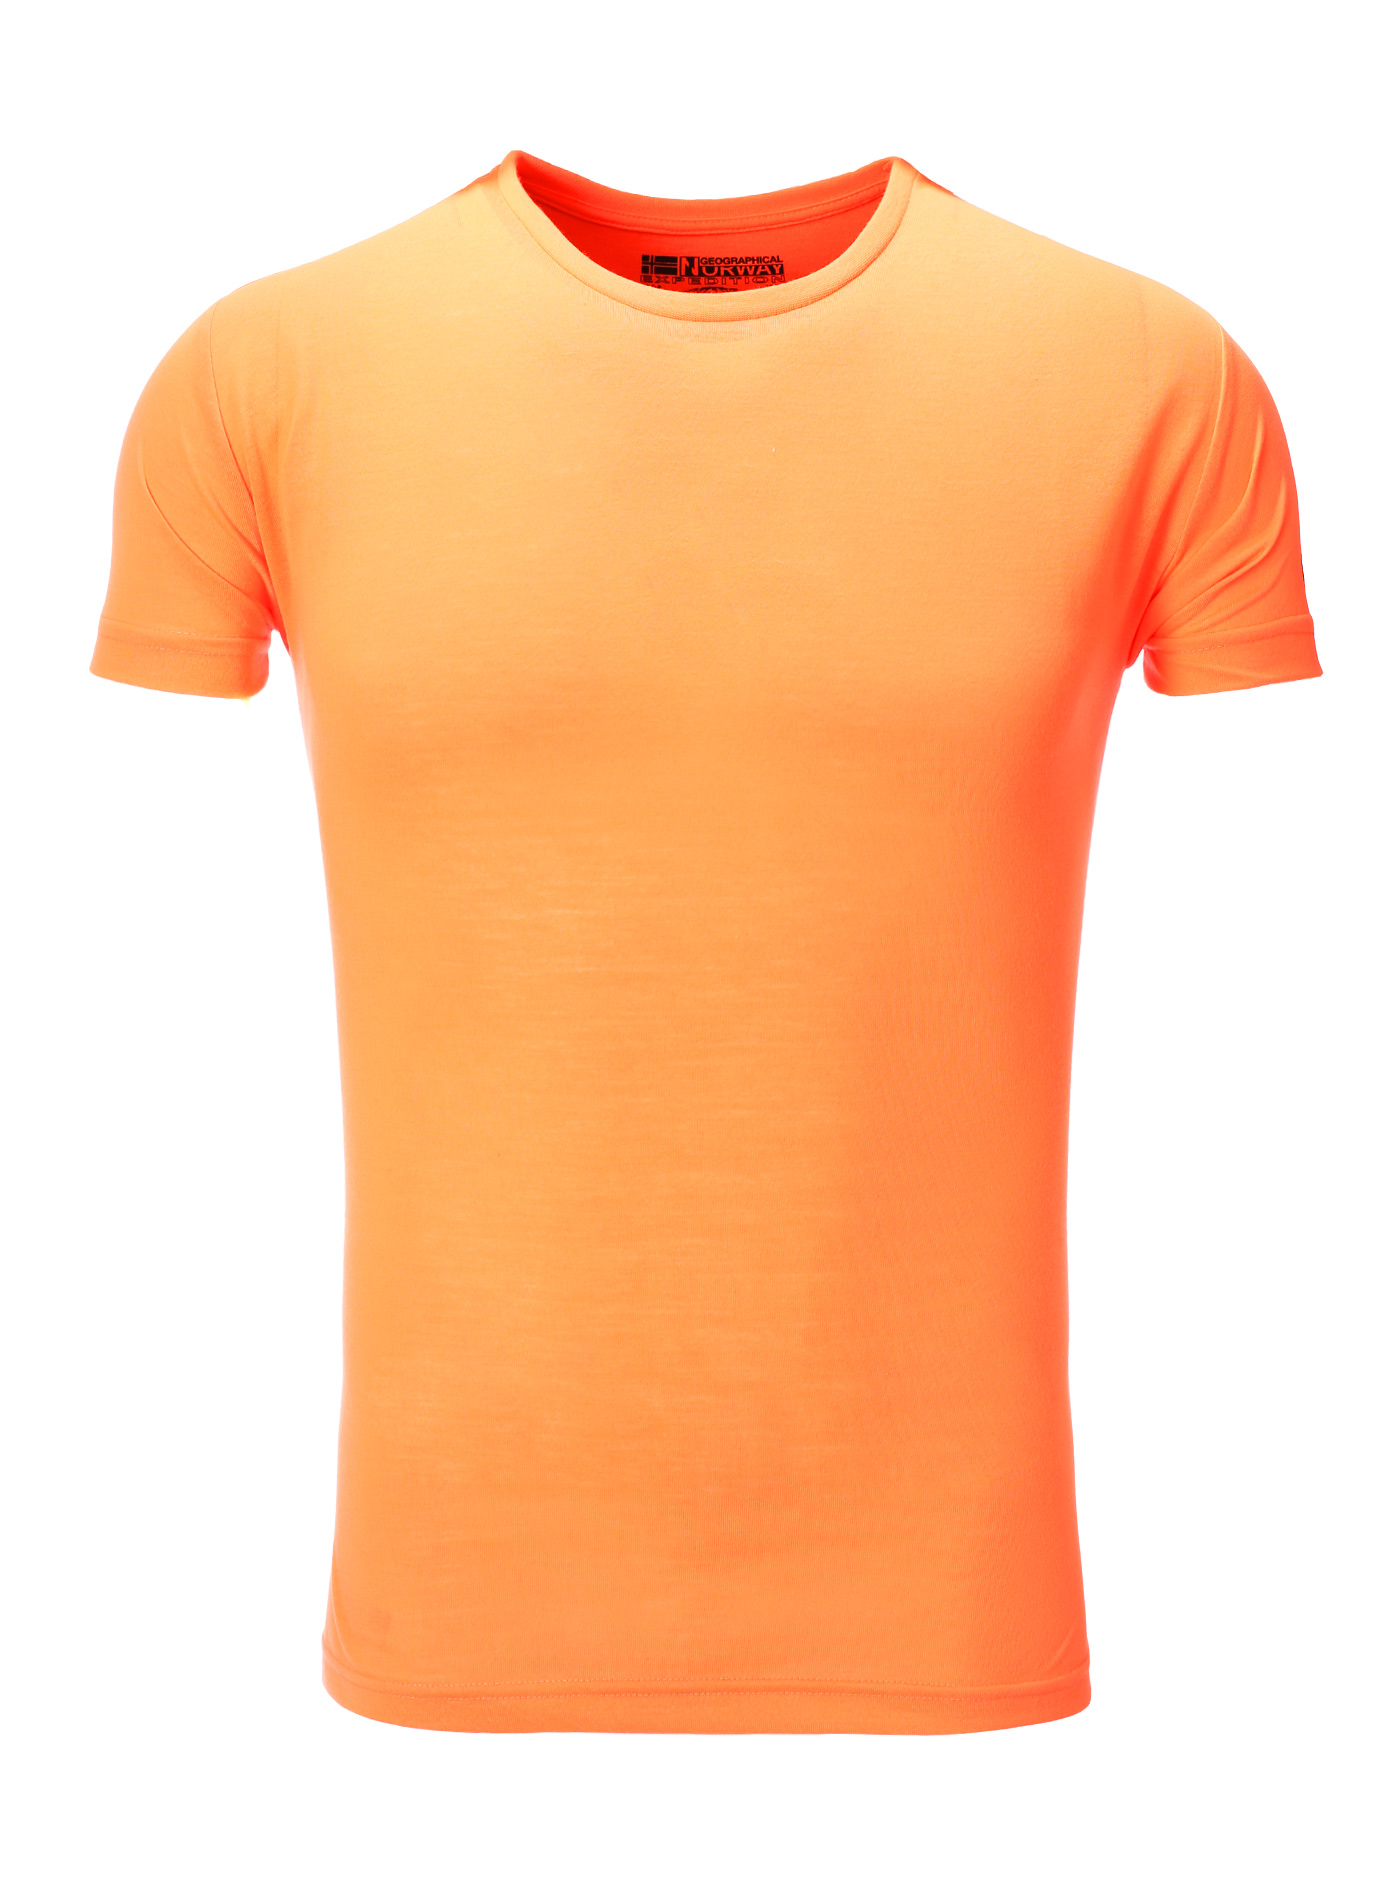 orange t shirt clipart - photo #11